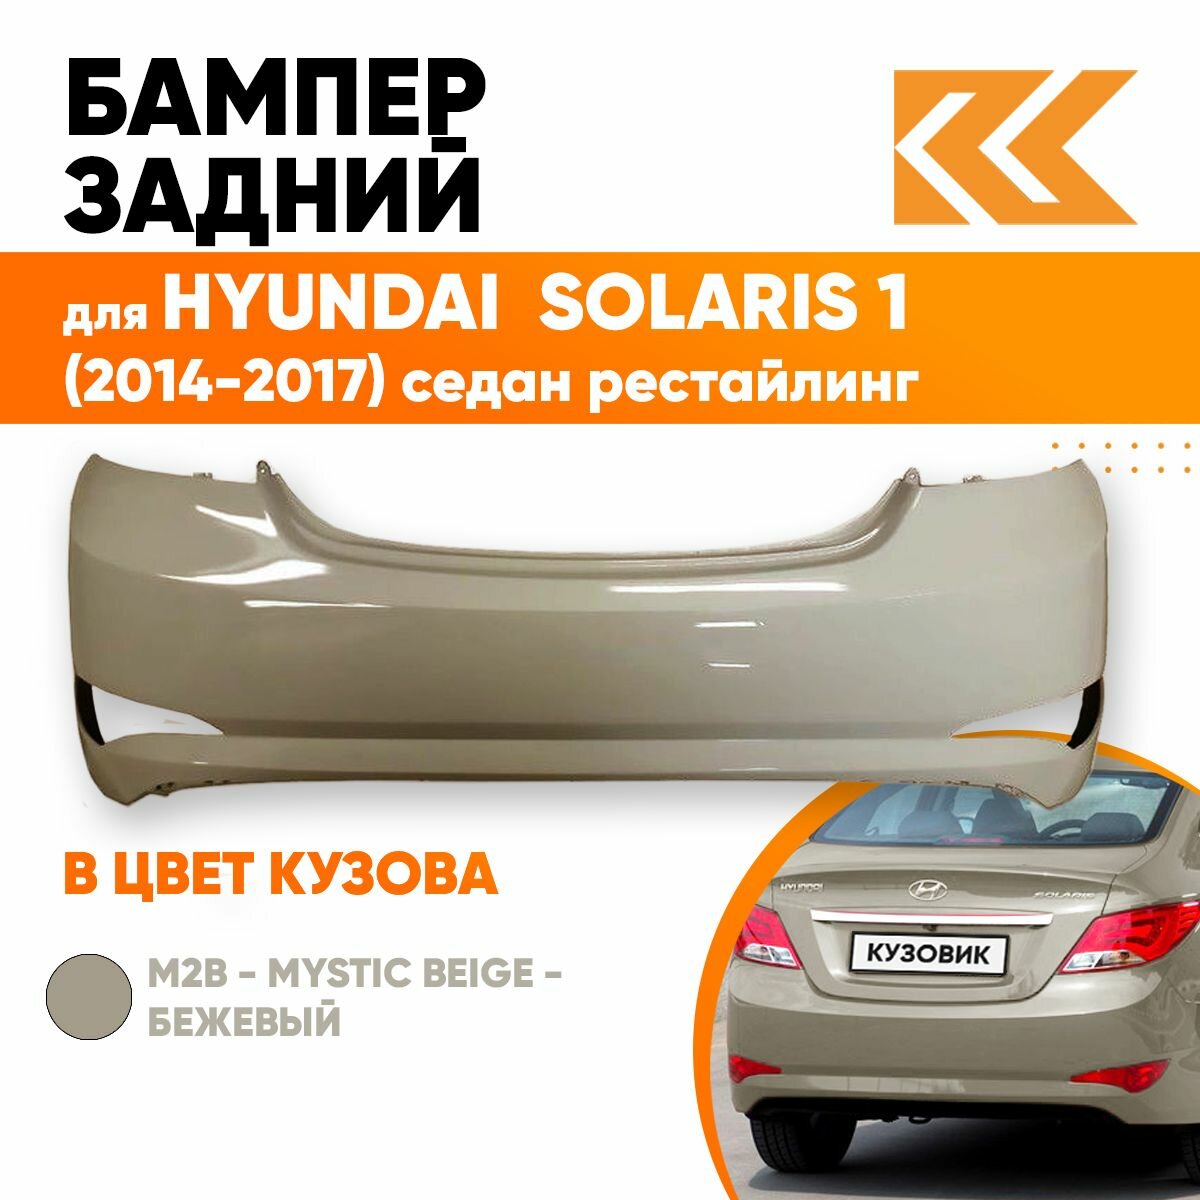 Бампер задний в цвет кузова для Хендай Солярис Hyundai Solaris 1 (2014-2017) седан M2B - MYSTIC BEIGE -Бежевый